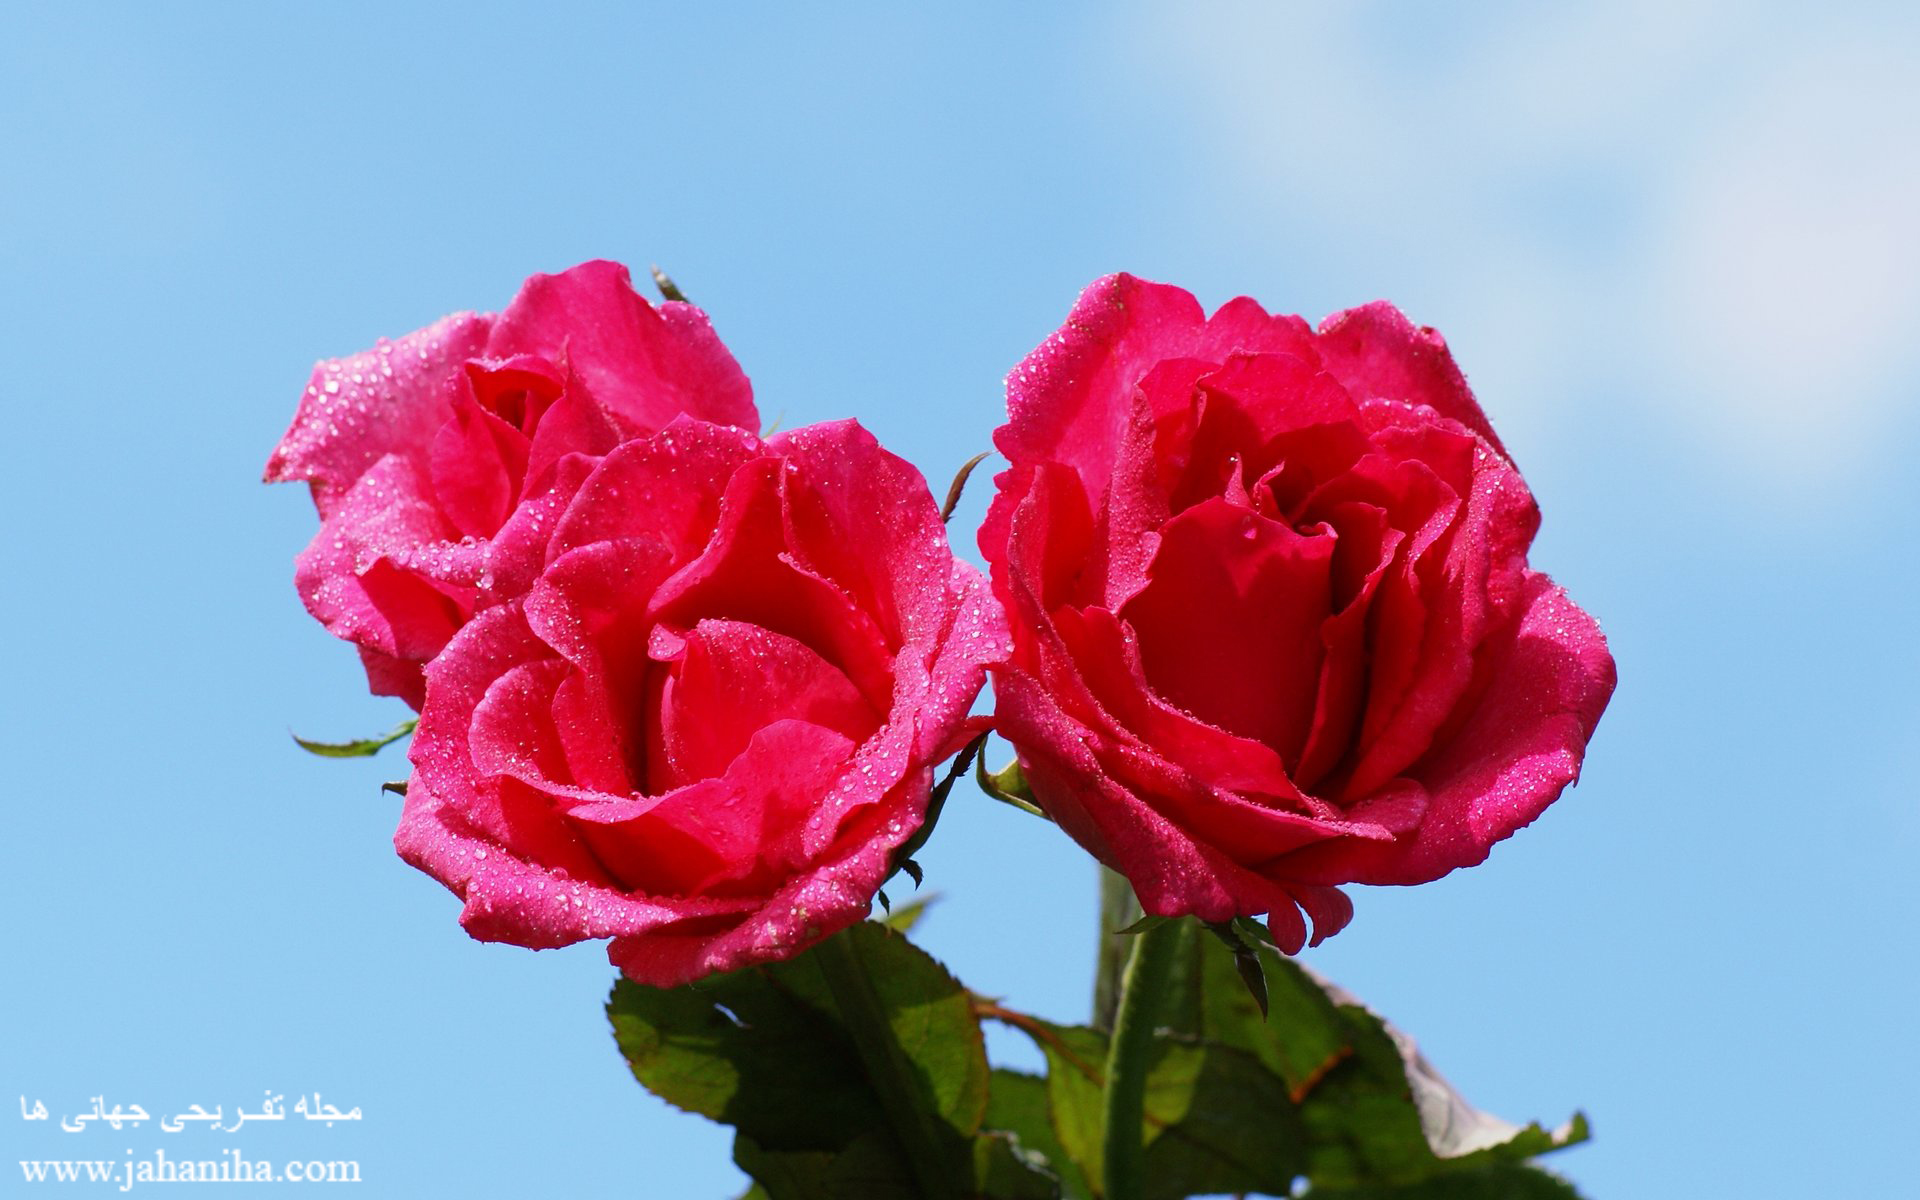 most beautiful roses